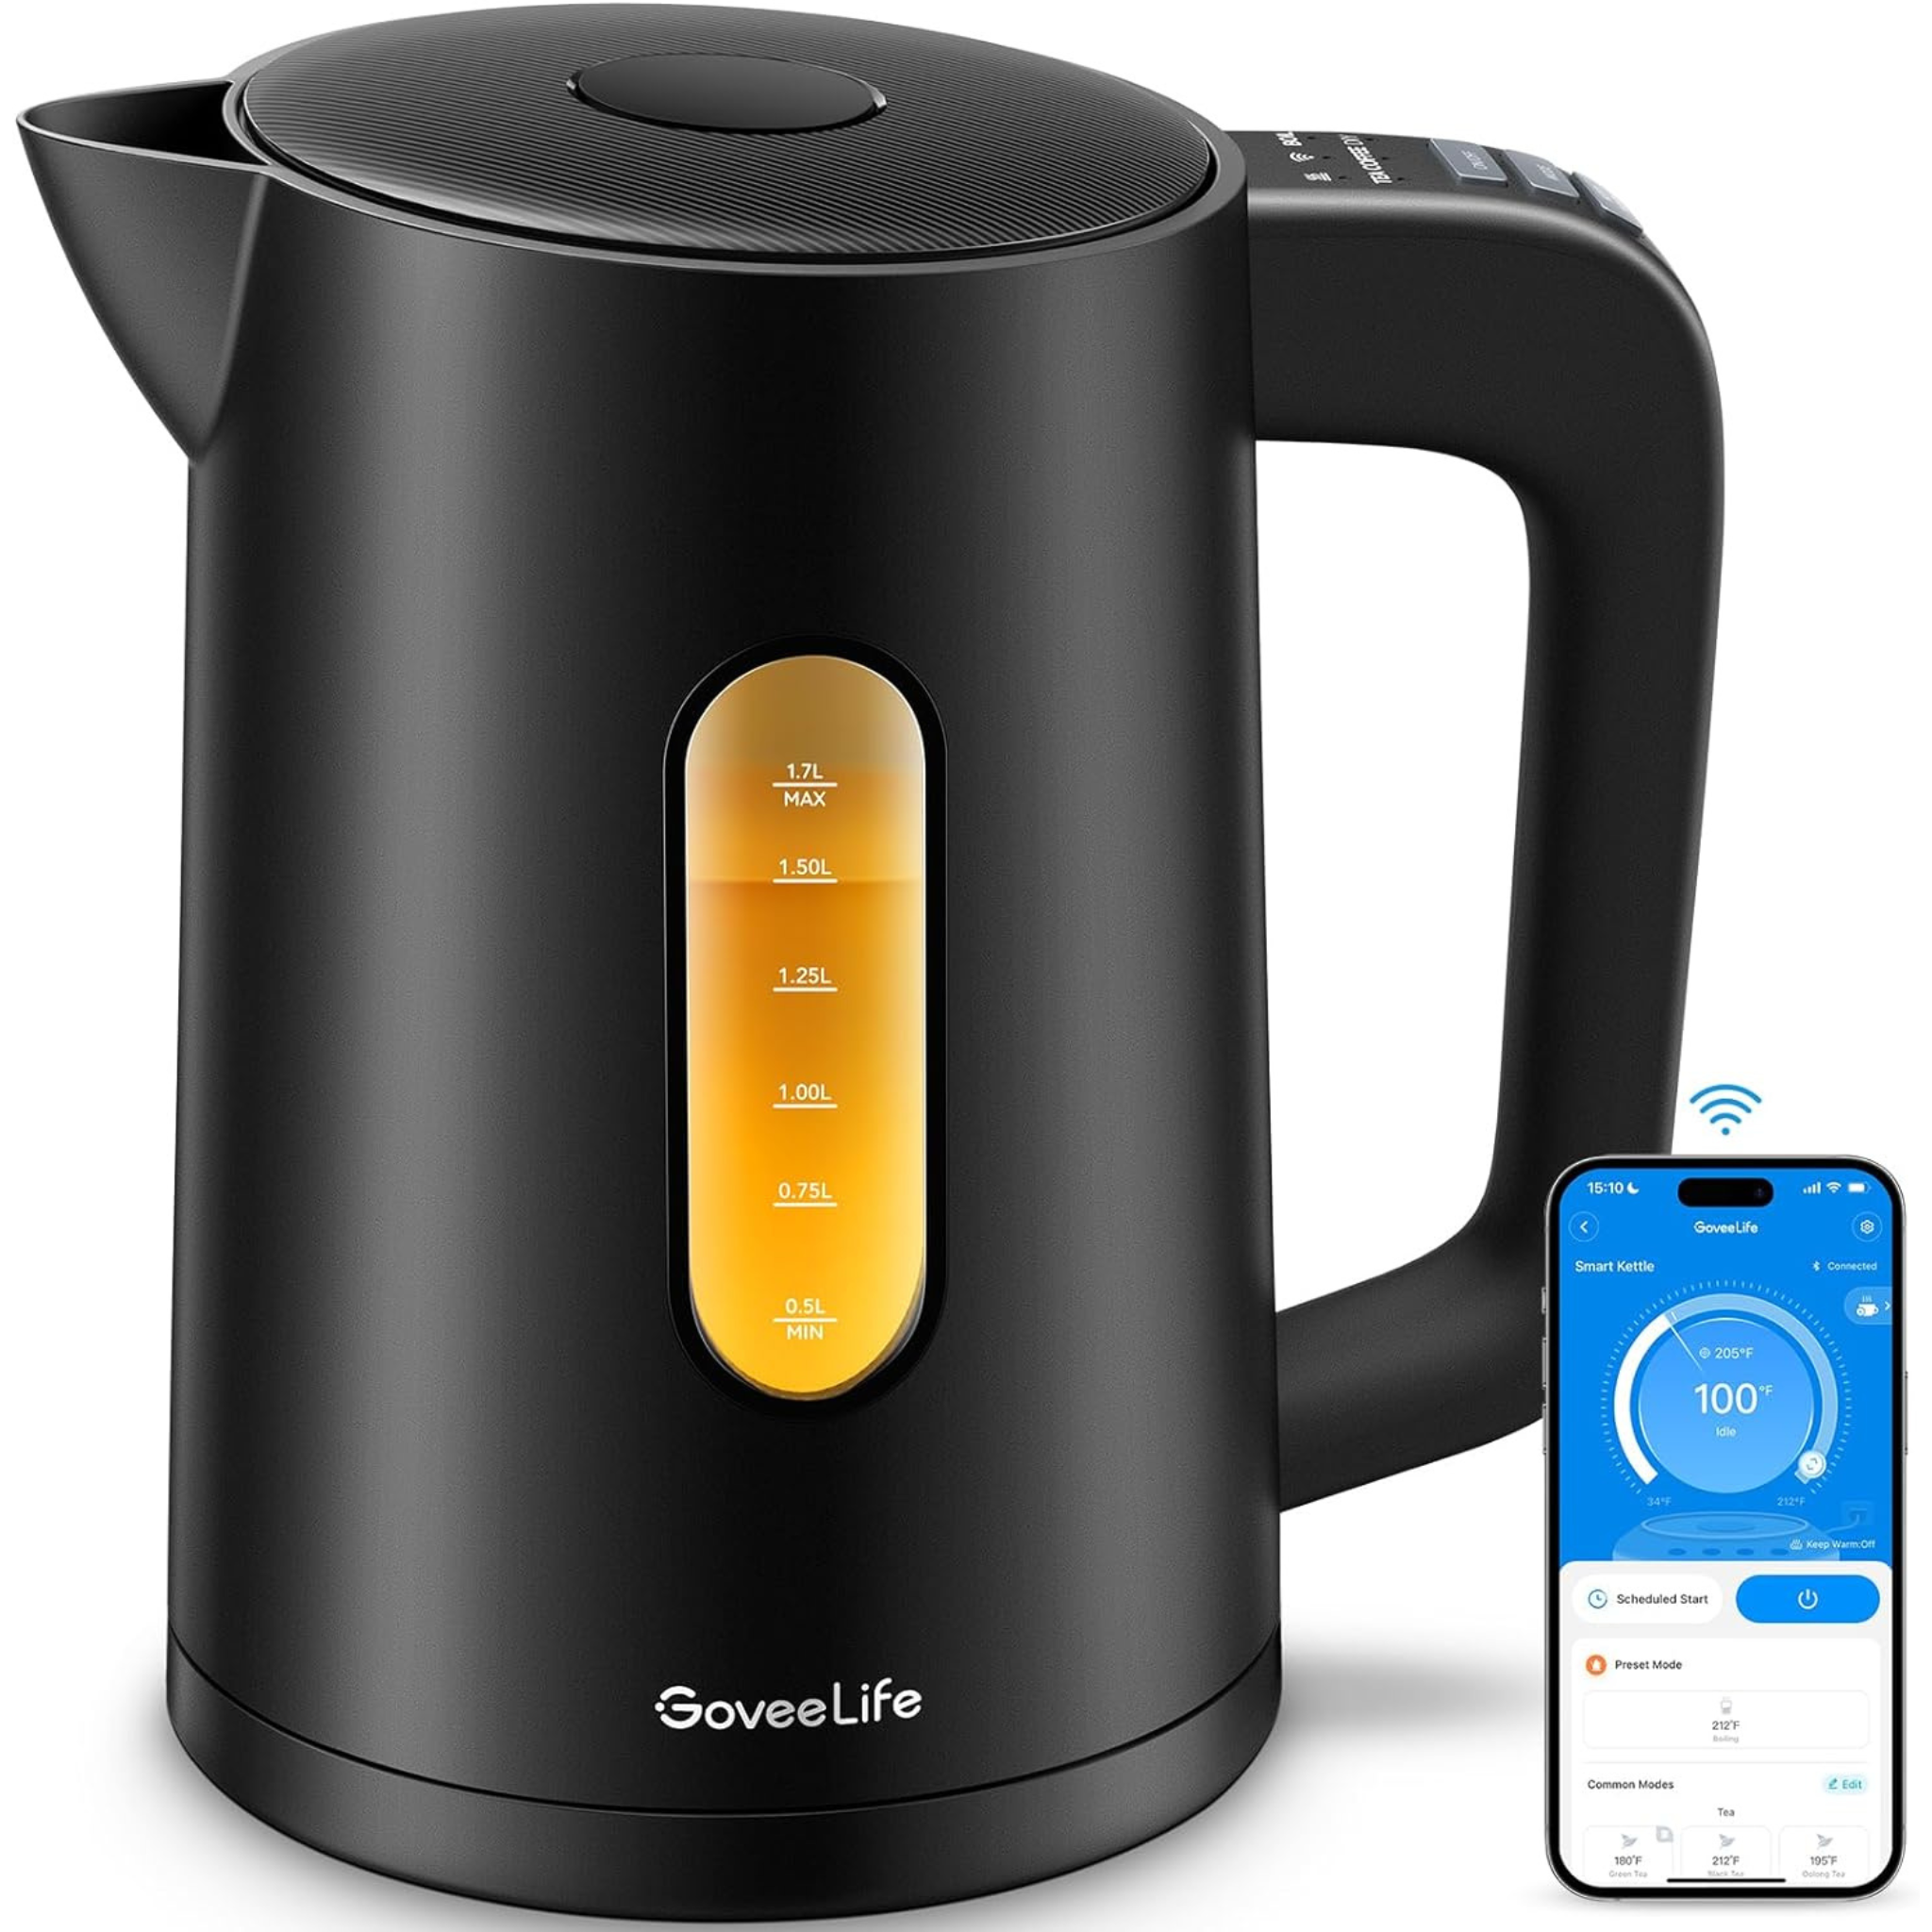 GoveeLife 1.7L Smart Electric Kettle with LED Indicator Lights